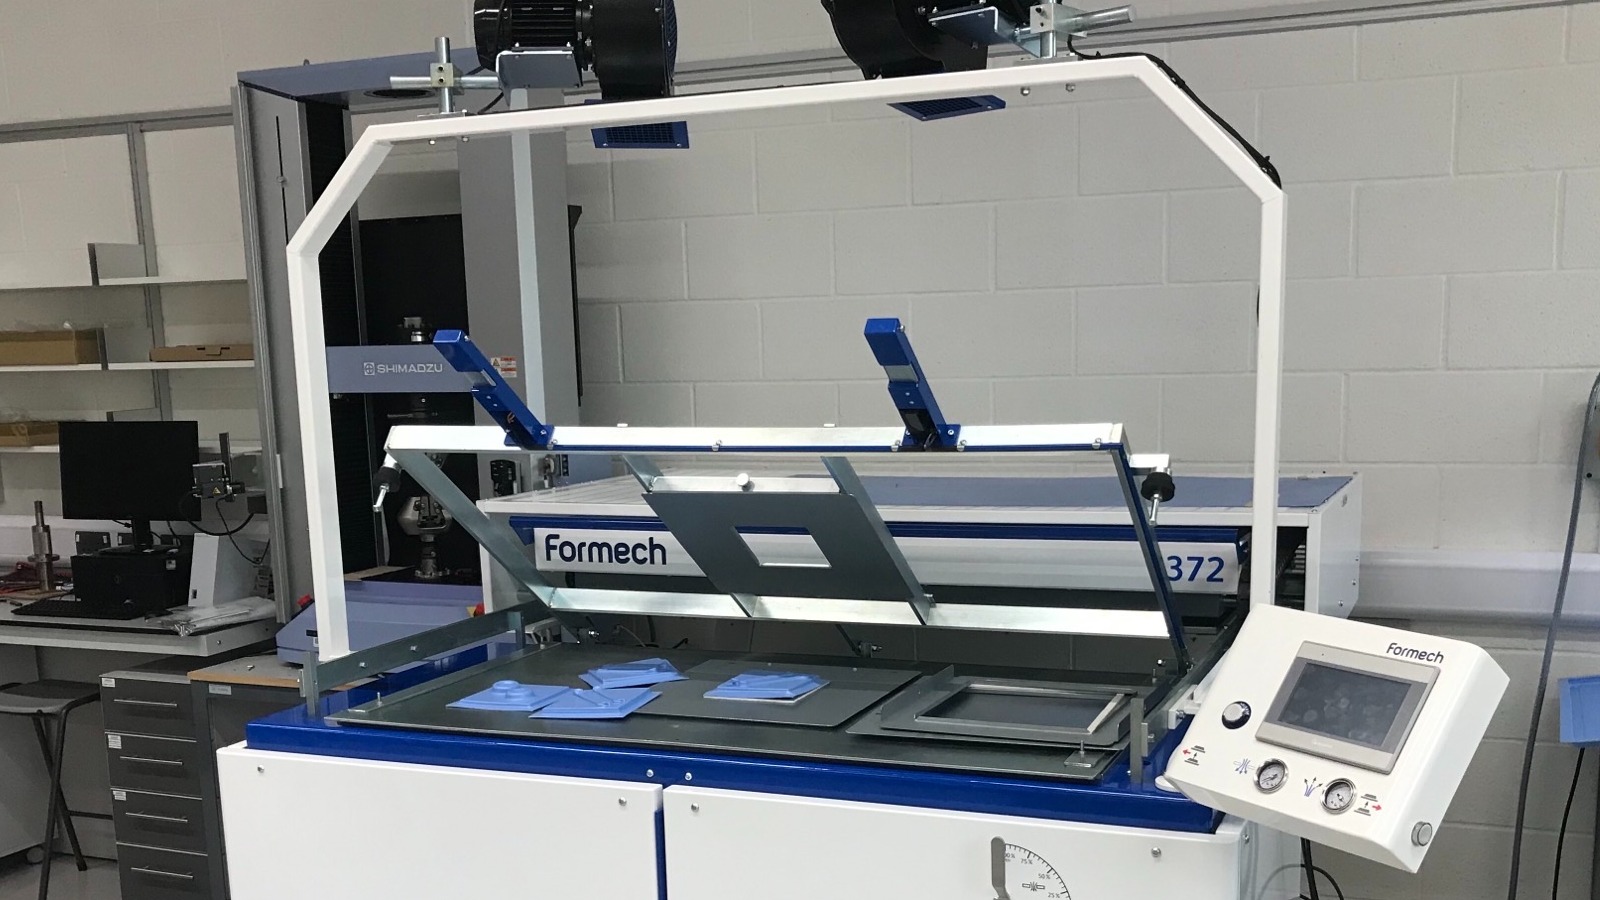 Image of Formech vacuum former machine